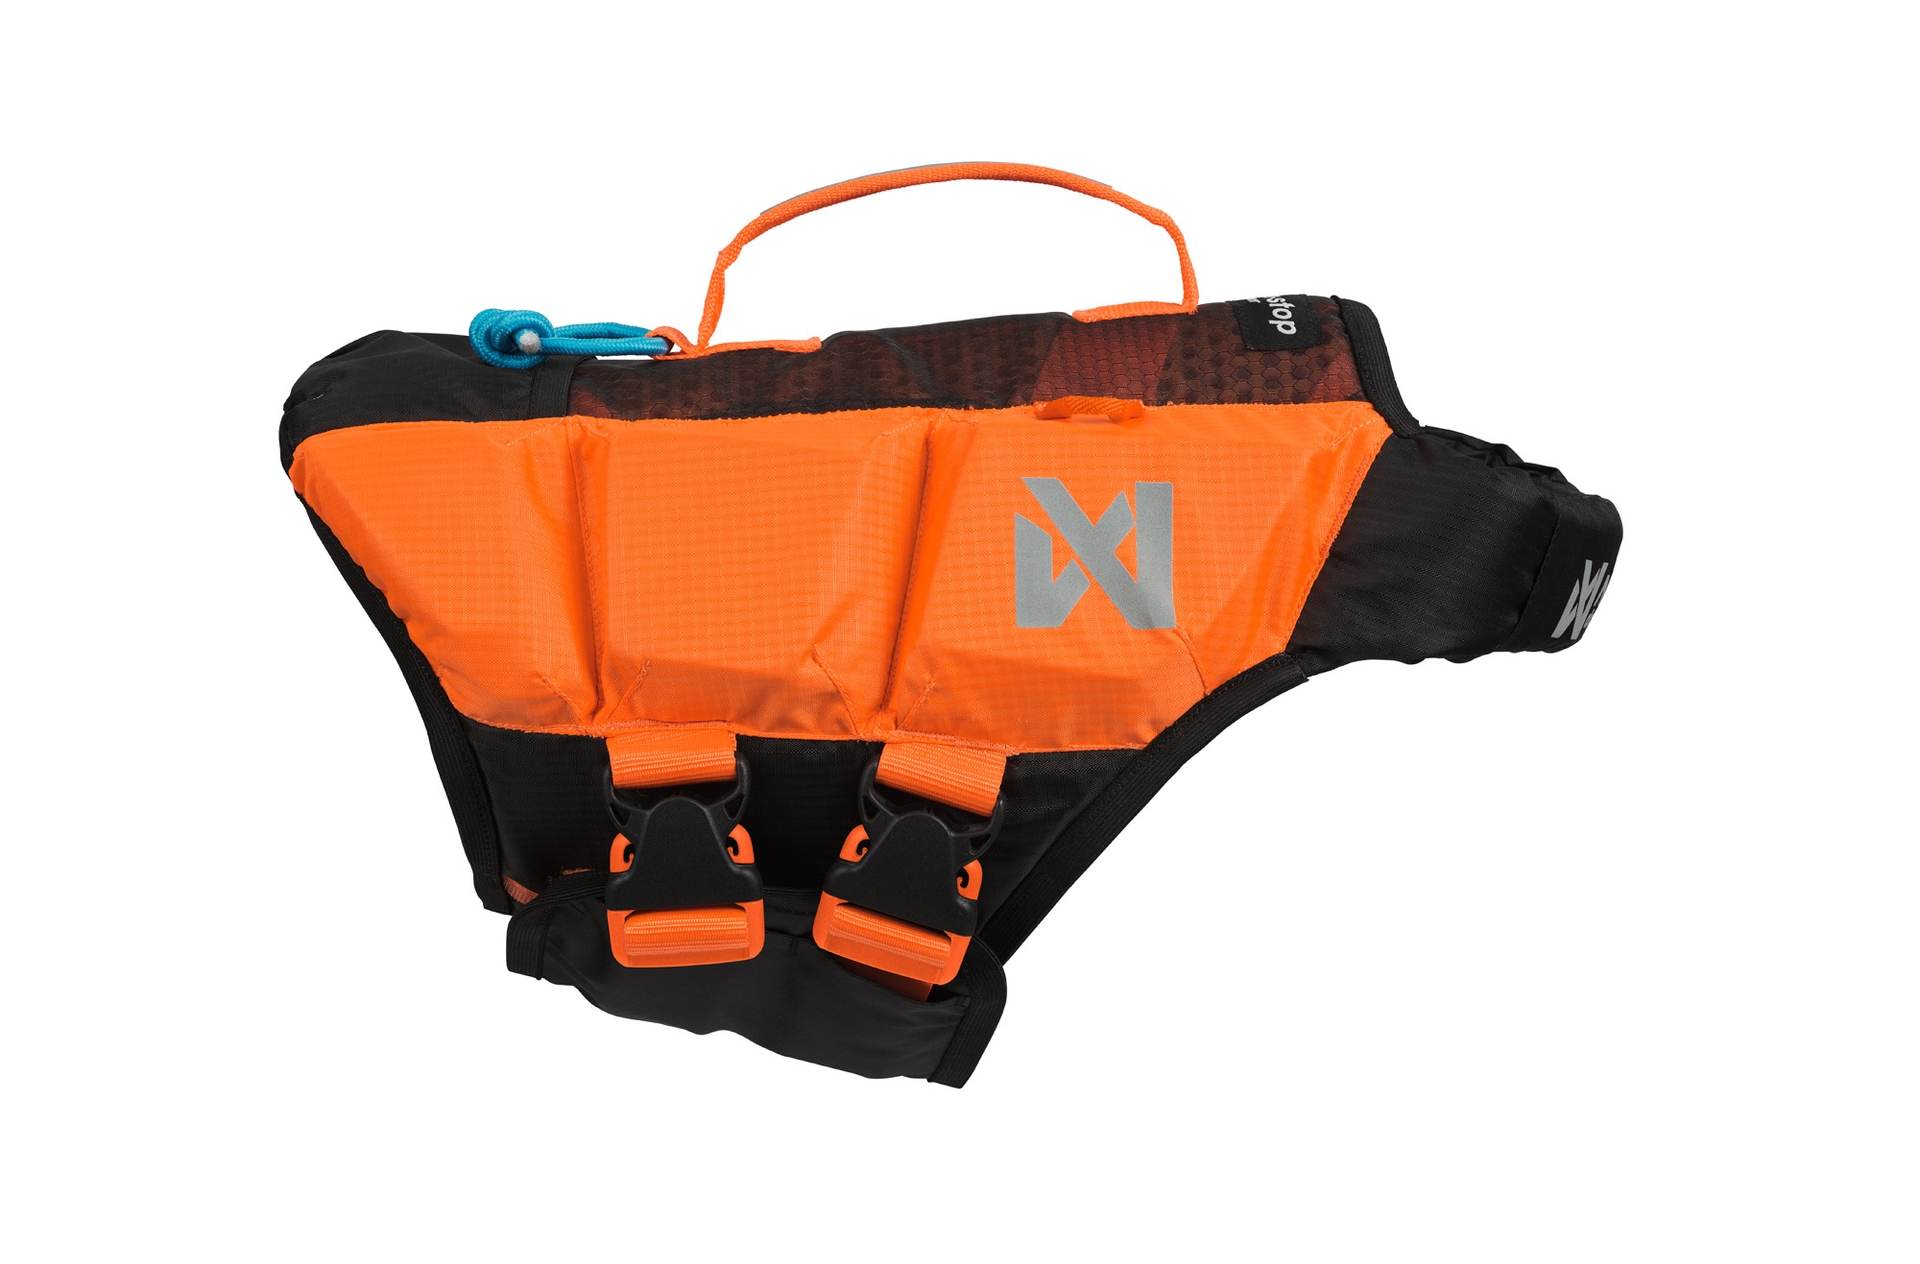 Protector life jacket